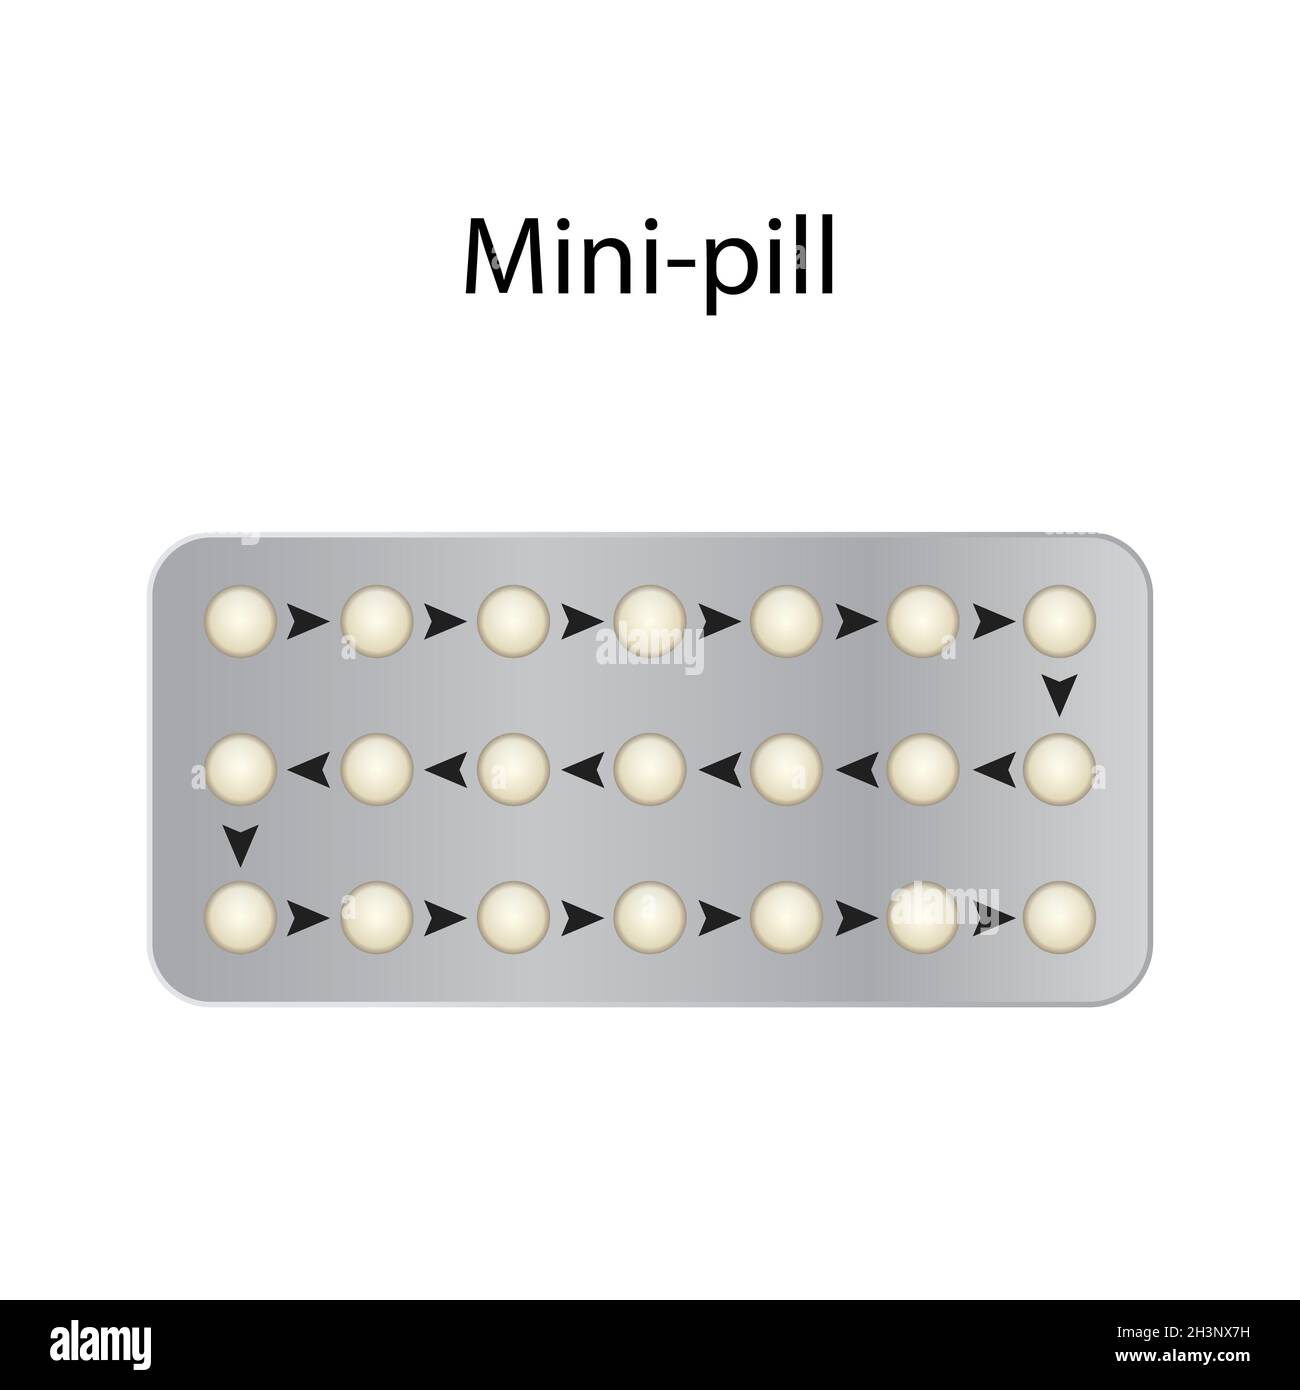 Mini-pill, illustration Stock Photo